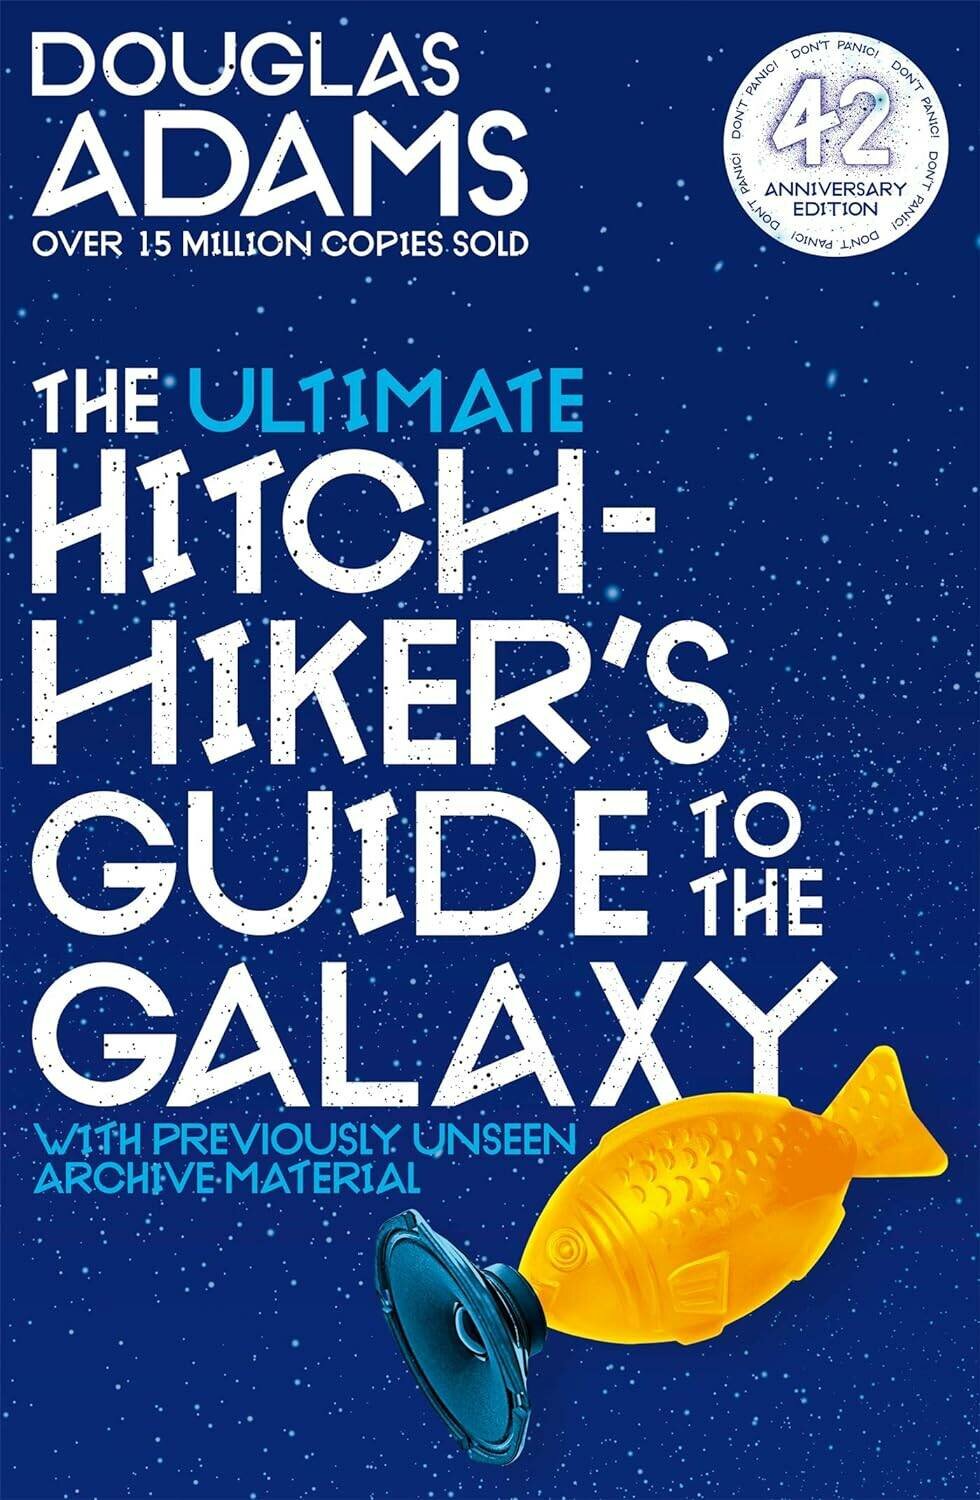 Douglas Adams. The Ultimate Hitchhiker's Guide to the Galaxy (Douglas Adams) Автостопом по Галактике, самы полный гид (Дуглас Адамс) /Книги на